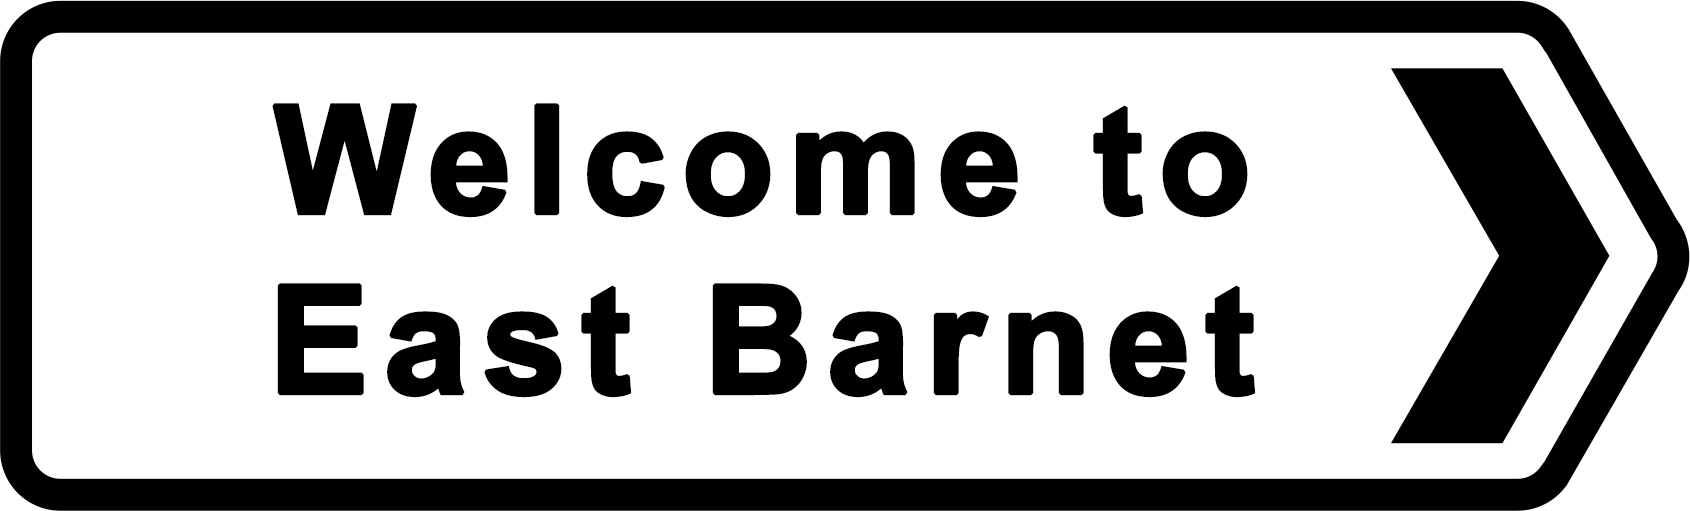 East Barnet School - Cheap Driving Schools Lessons in East Barnet, EN4, The Borough of Barnet, Hertfordshire, Greater London